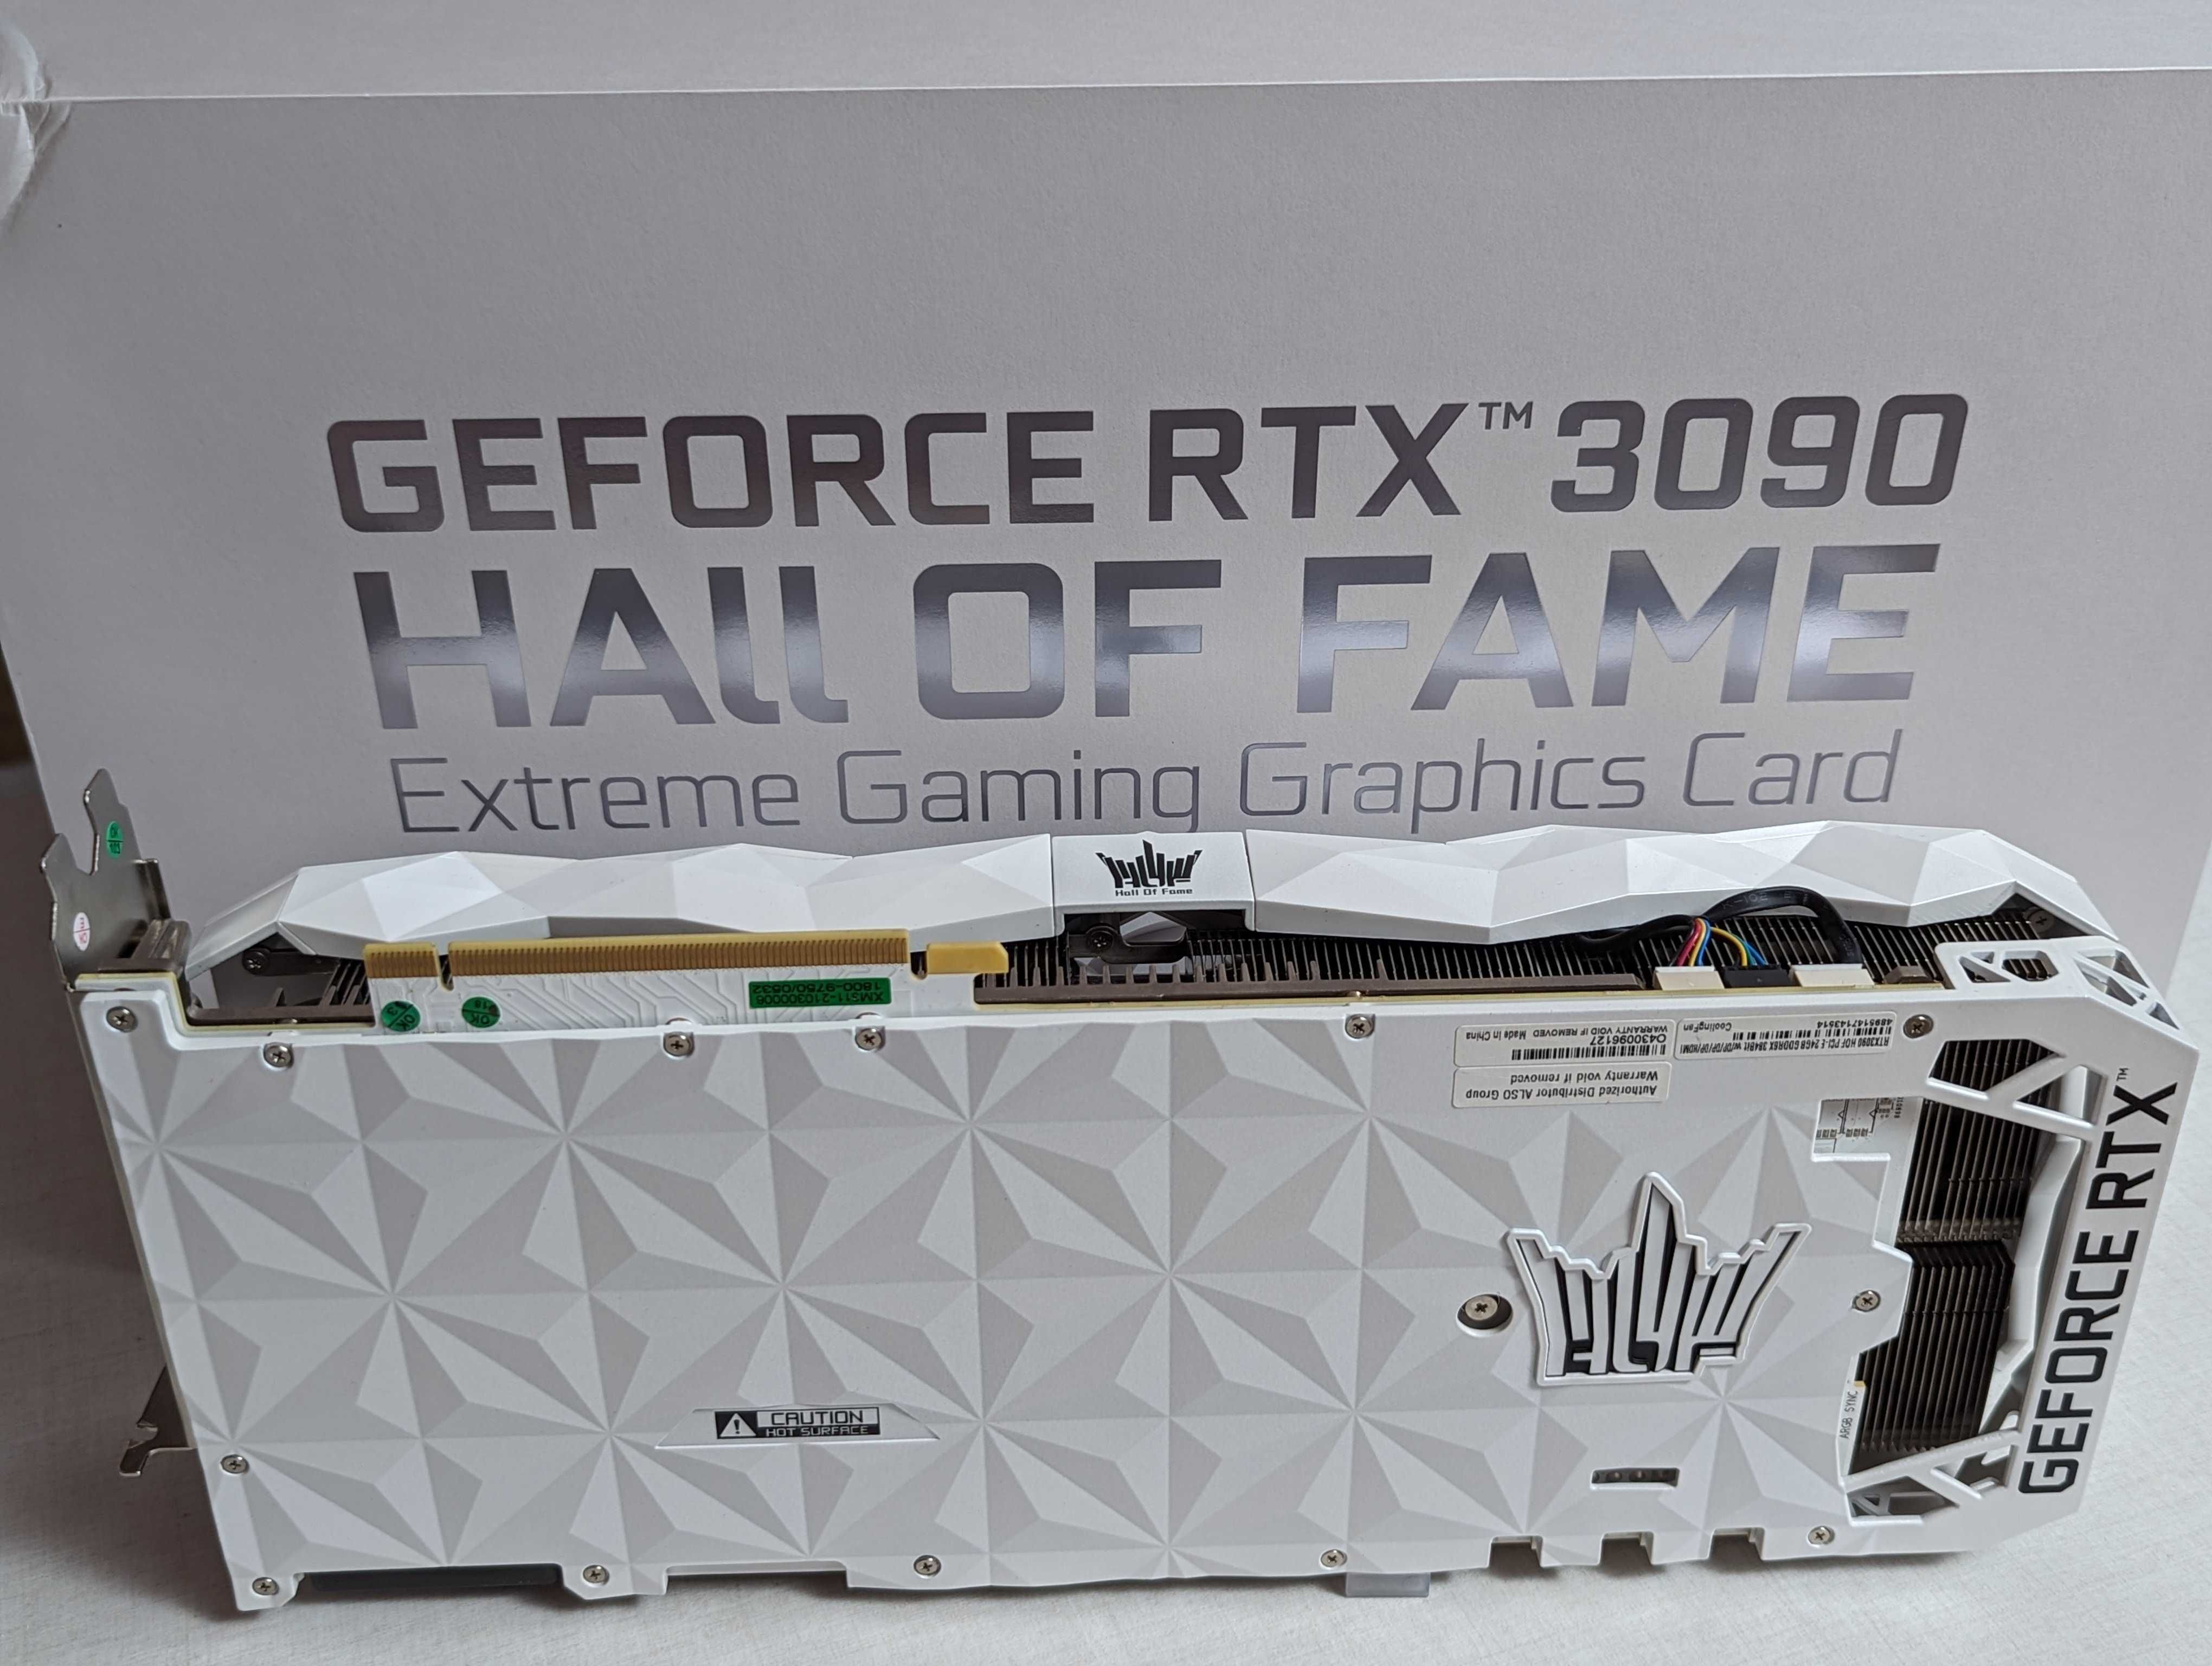 Galax GeForce RTX 3090 Hall of Fame 24GB